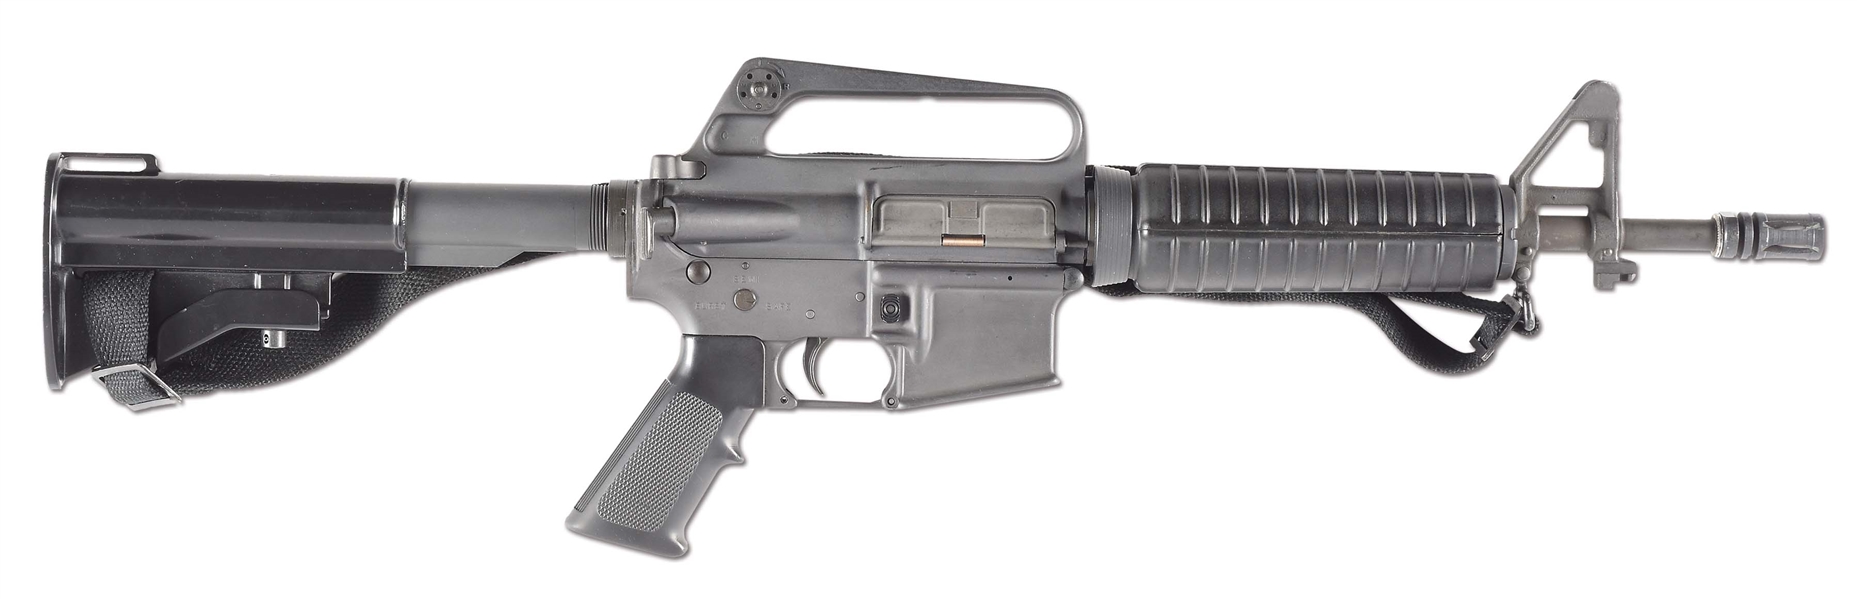 (N) HIGH CONDITION COLT M16A2 MACHINE GUN (FULLY TRANSFERABLE).